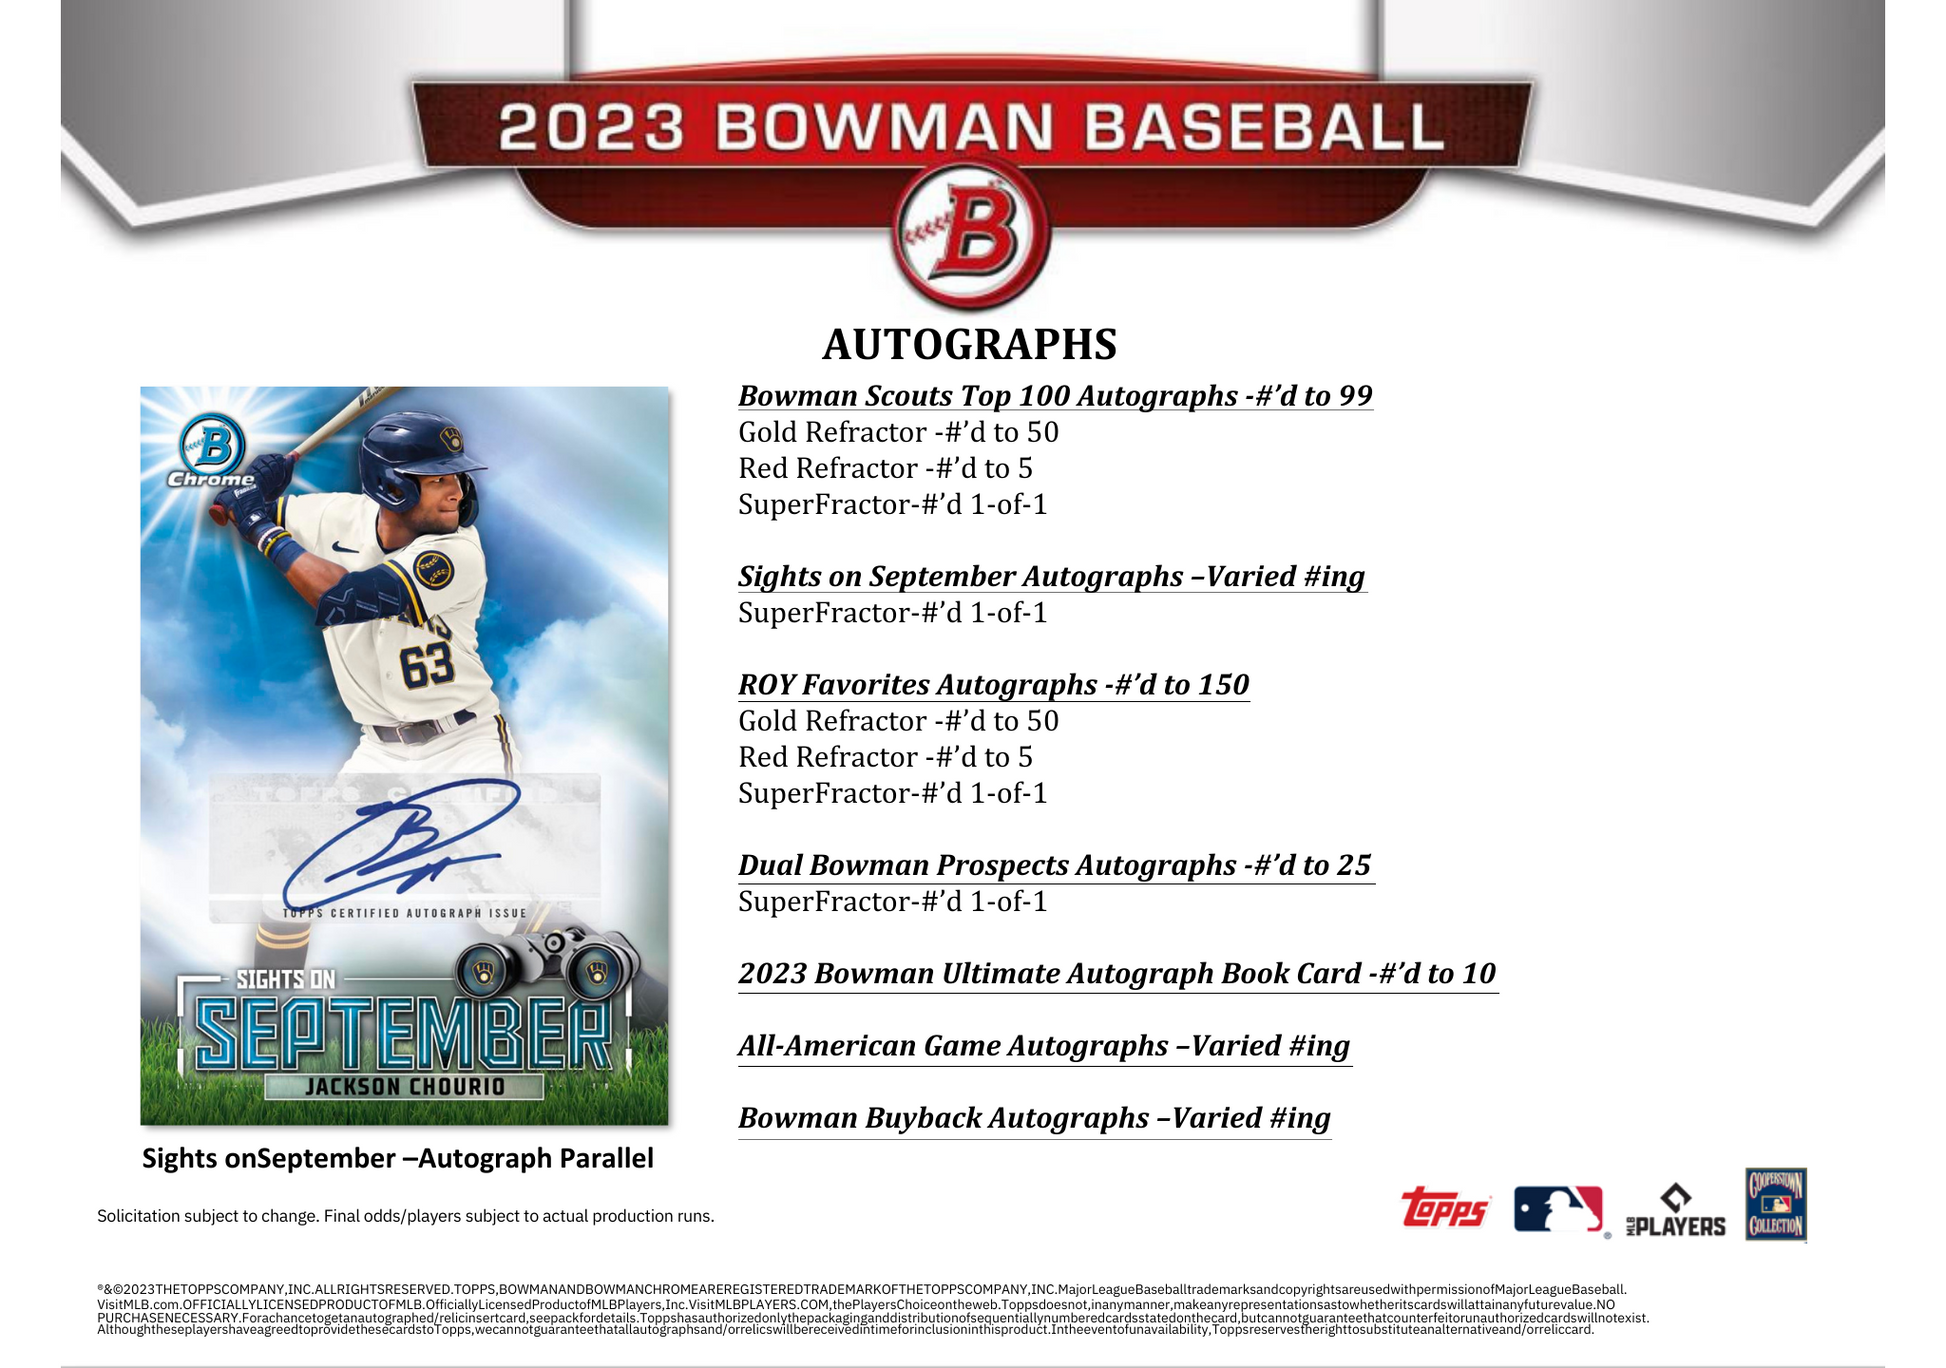 2023 Bowman Baseball HTA Jumbo – Collect Binghamton